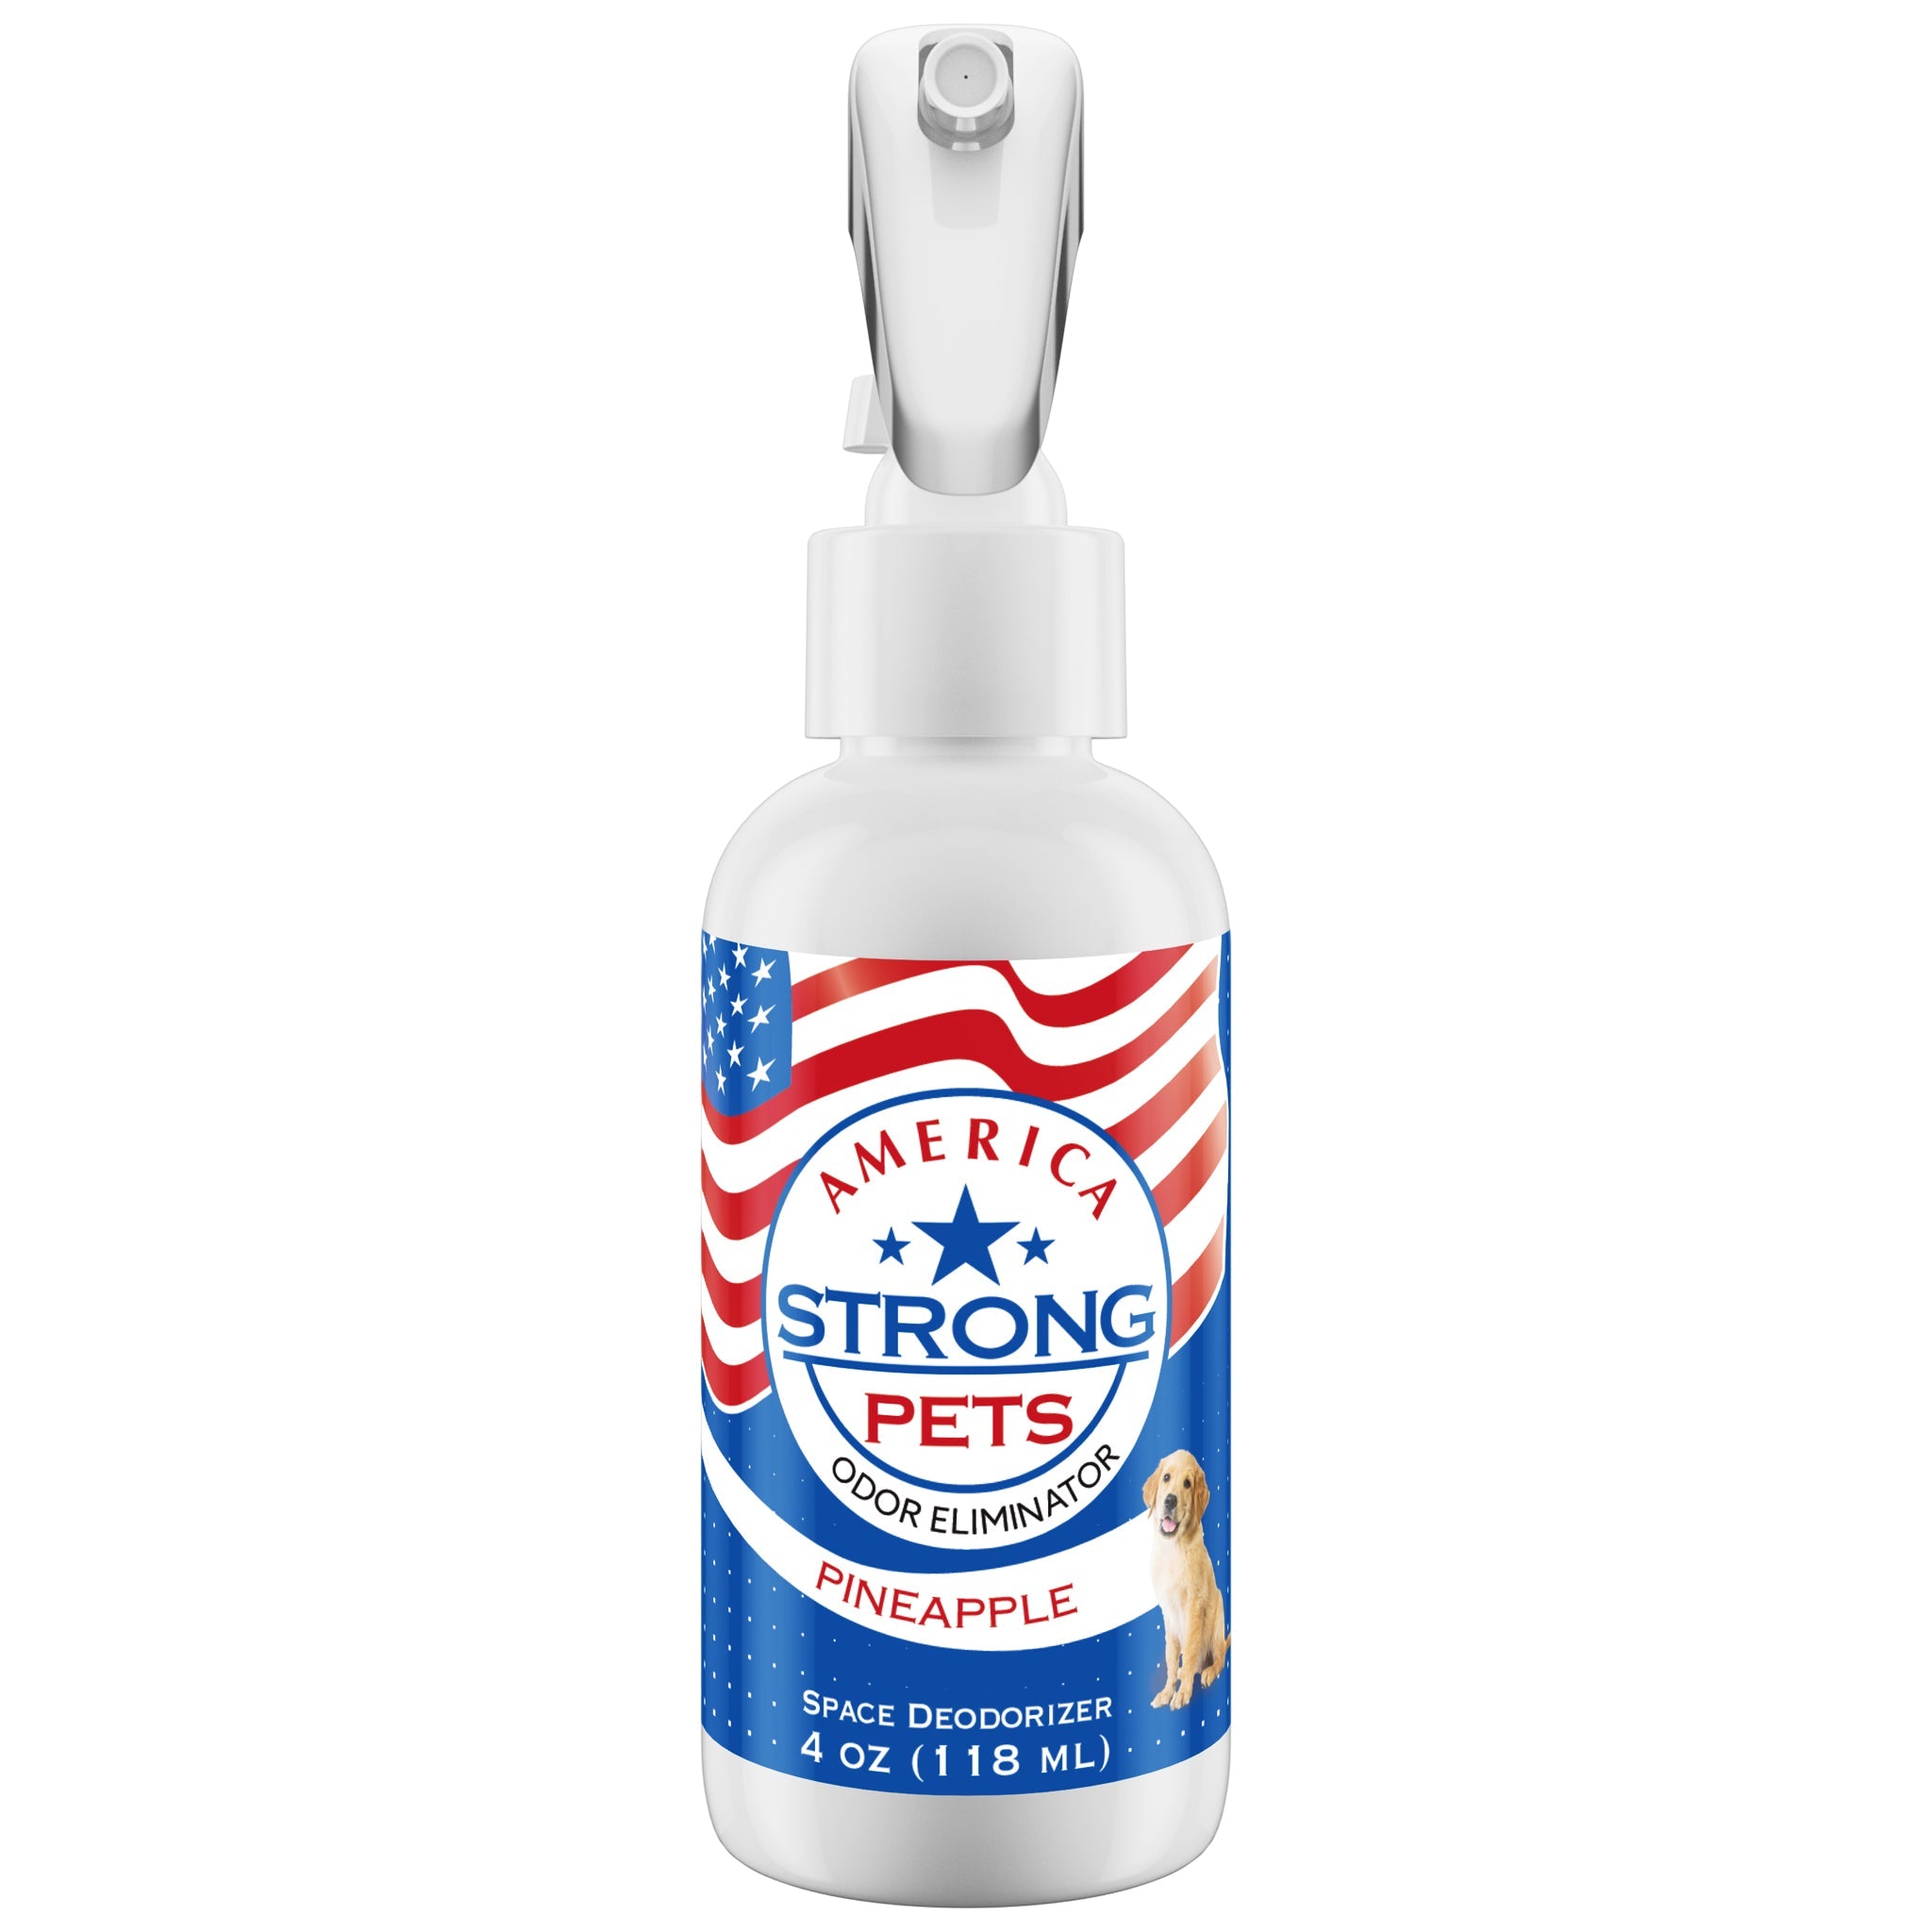 America Strong Pet Odor Eliminator - Pineapple Scent Size: 4 fl oz